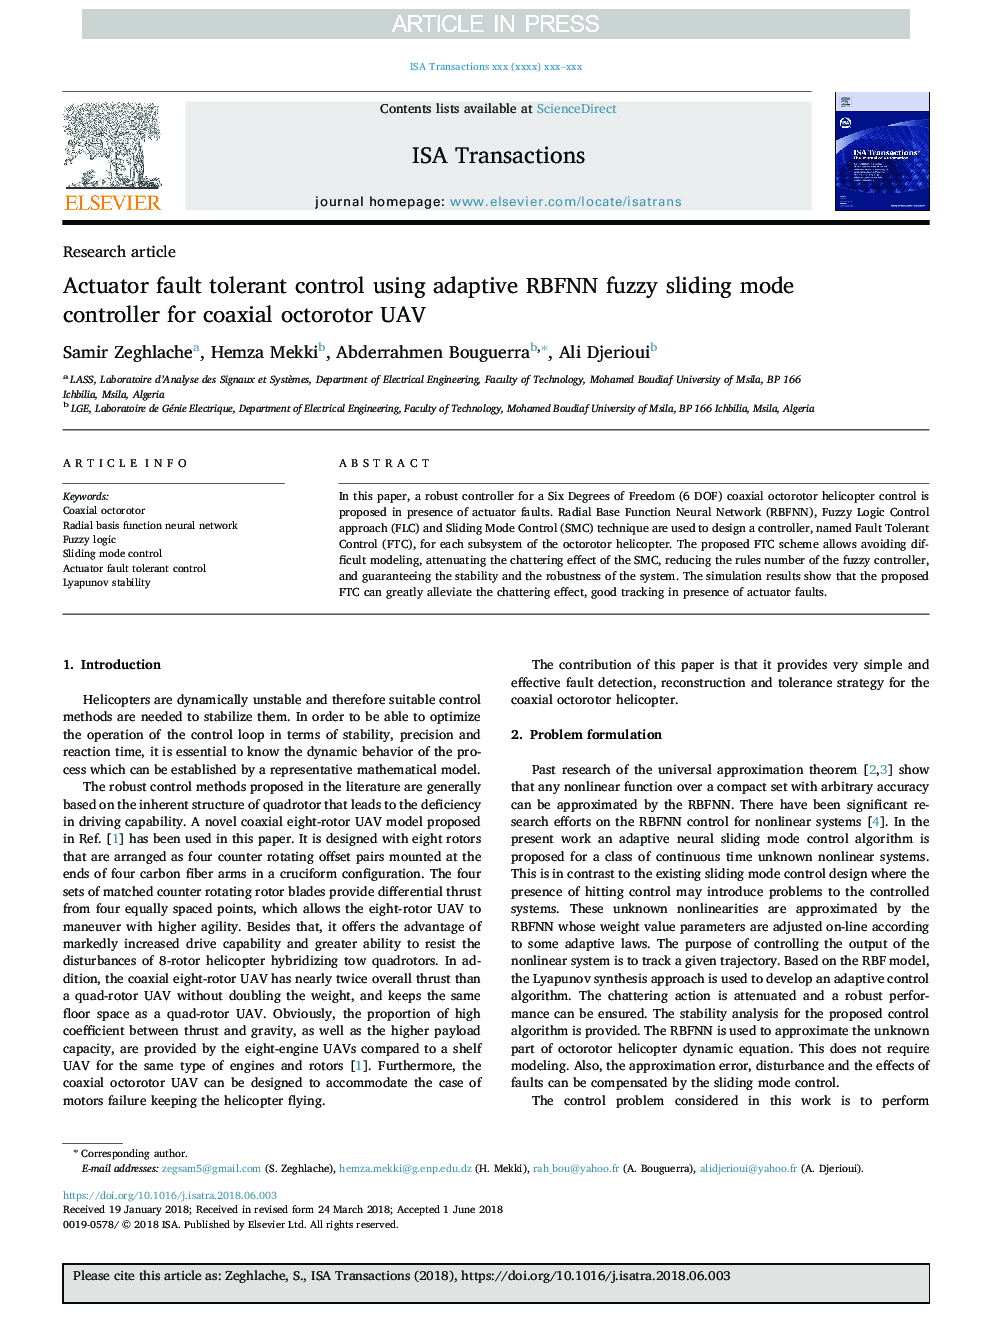 Actuator fault tolerant control using adaptive RBFNN fuzzy sliding mode controller for coaxial octorotor UAV